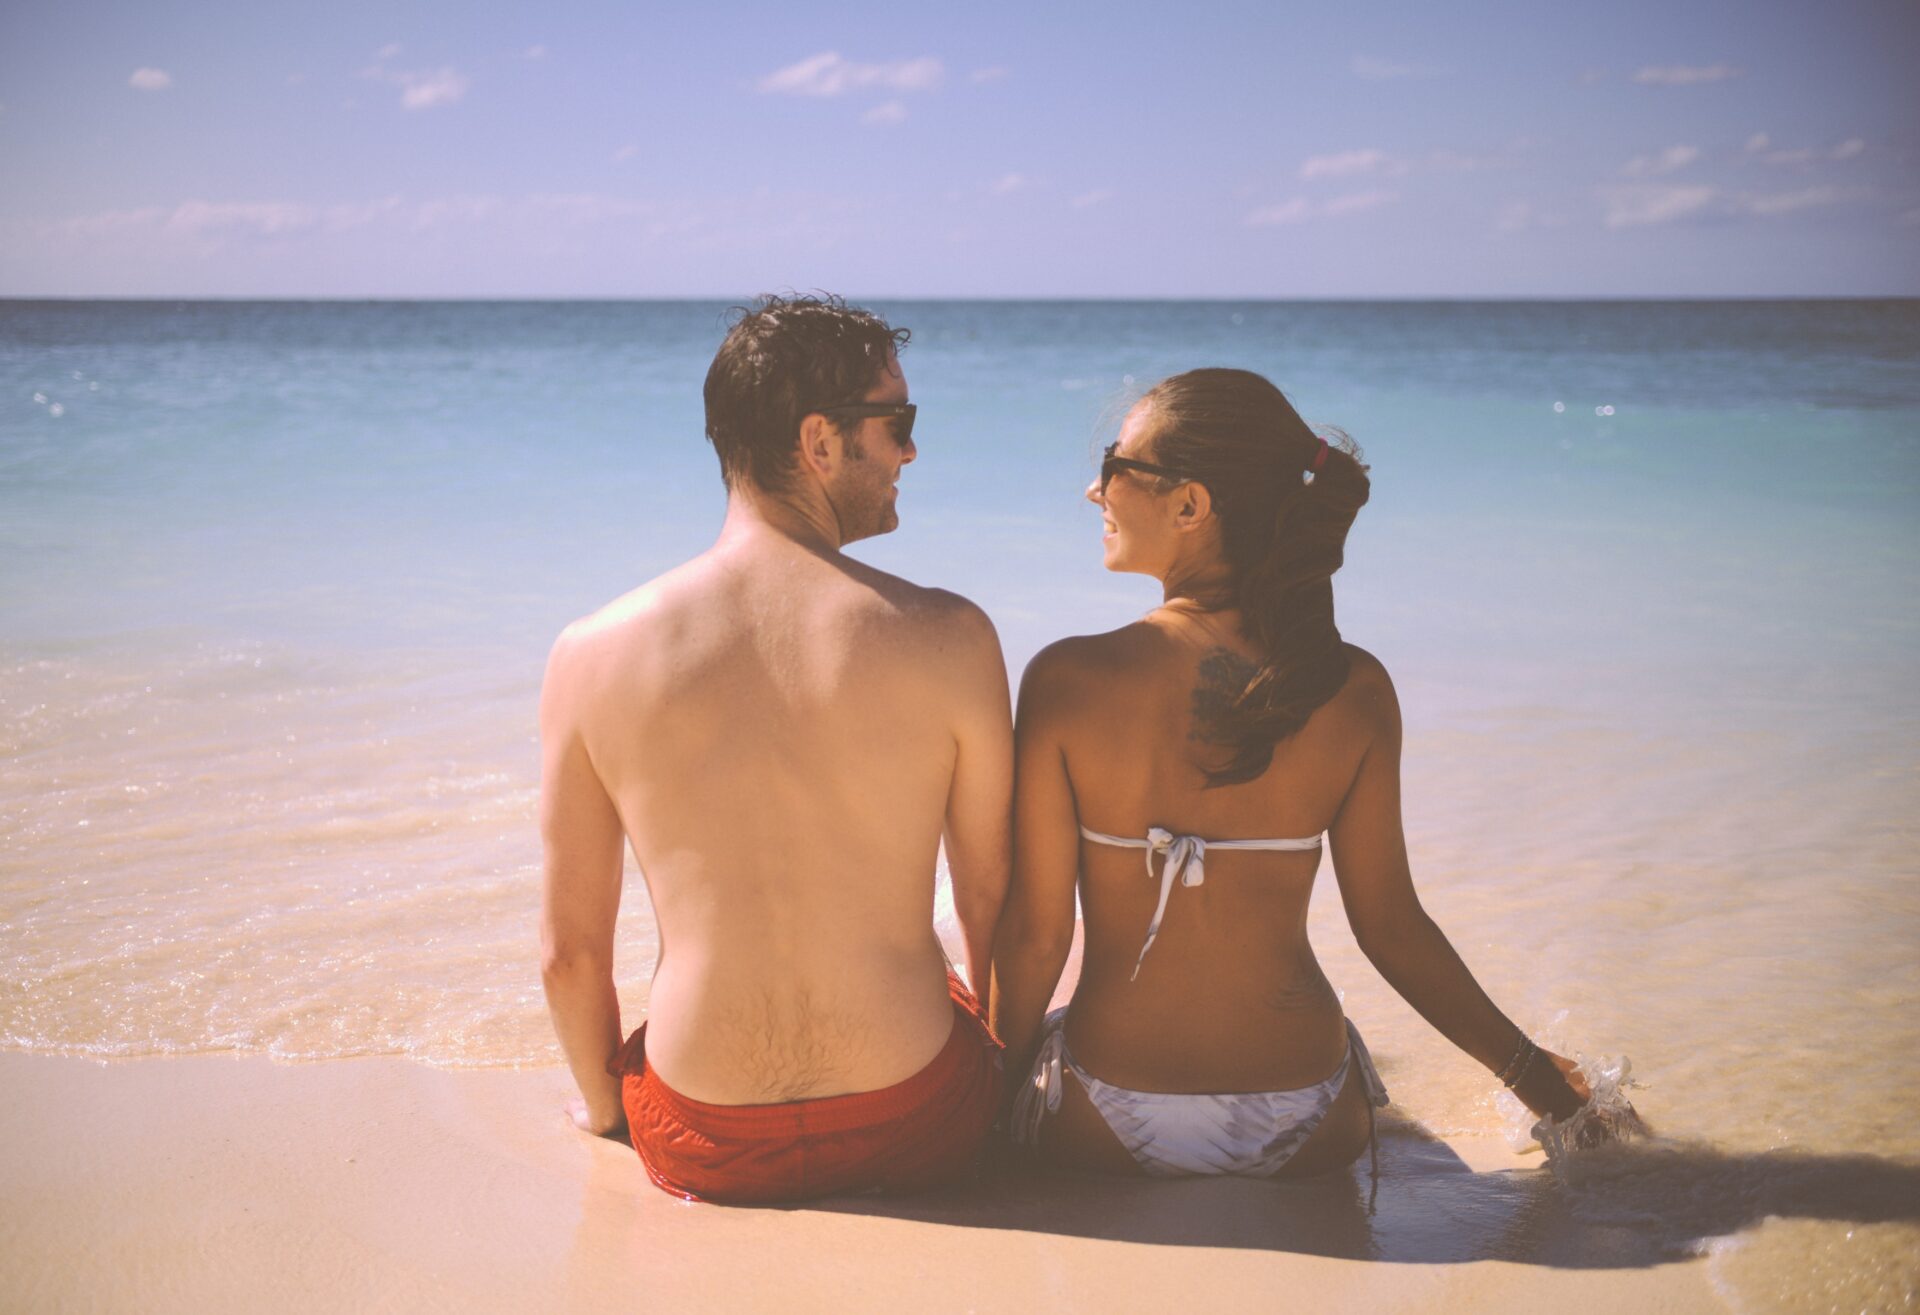 lugar-romantico-praia-casal Presente do dia dos namorados! Lugares românticos  